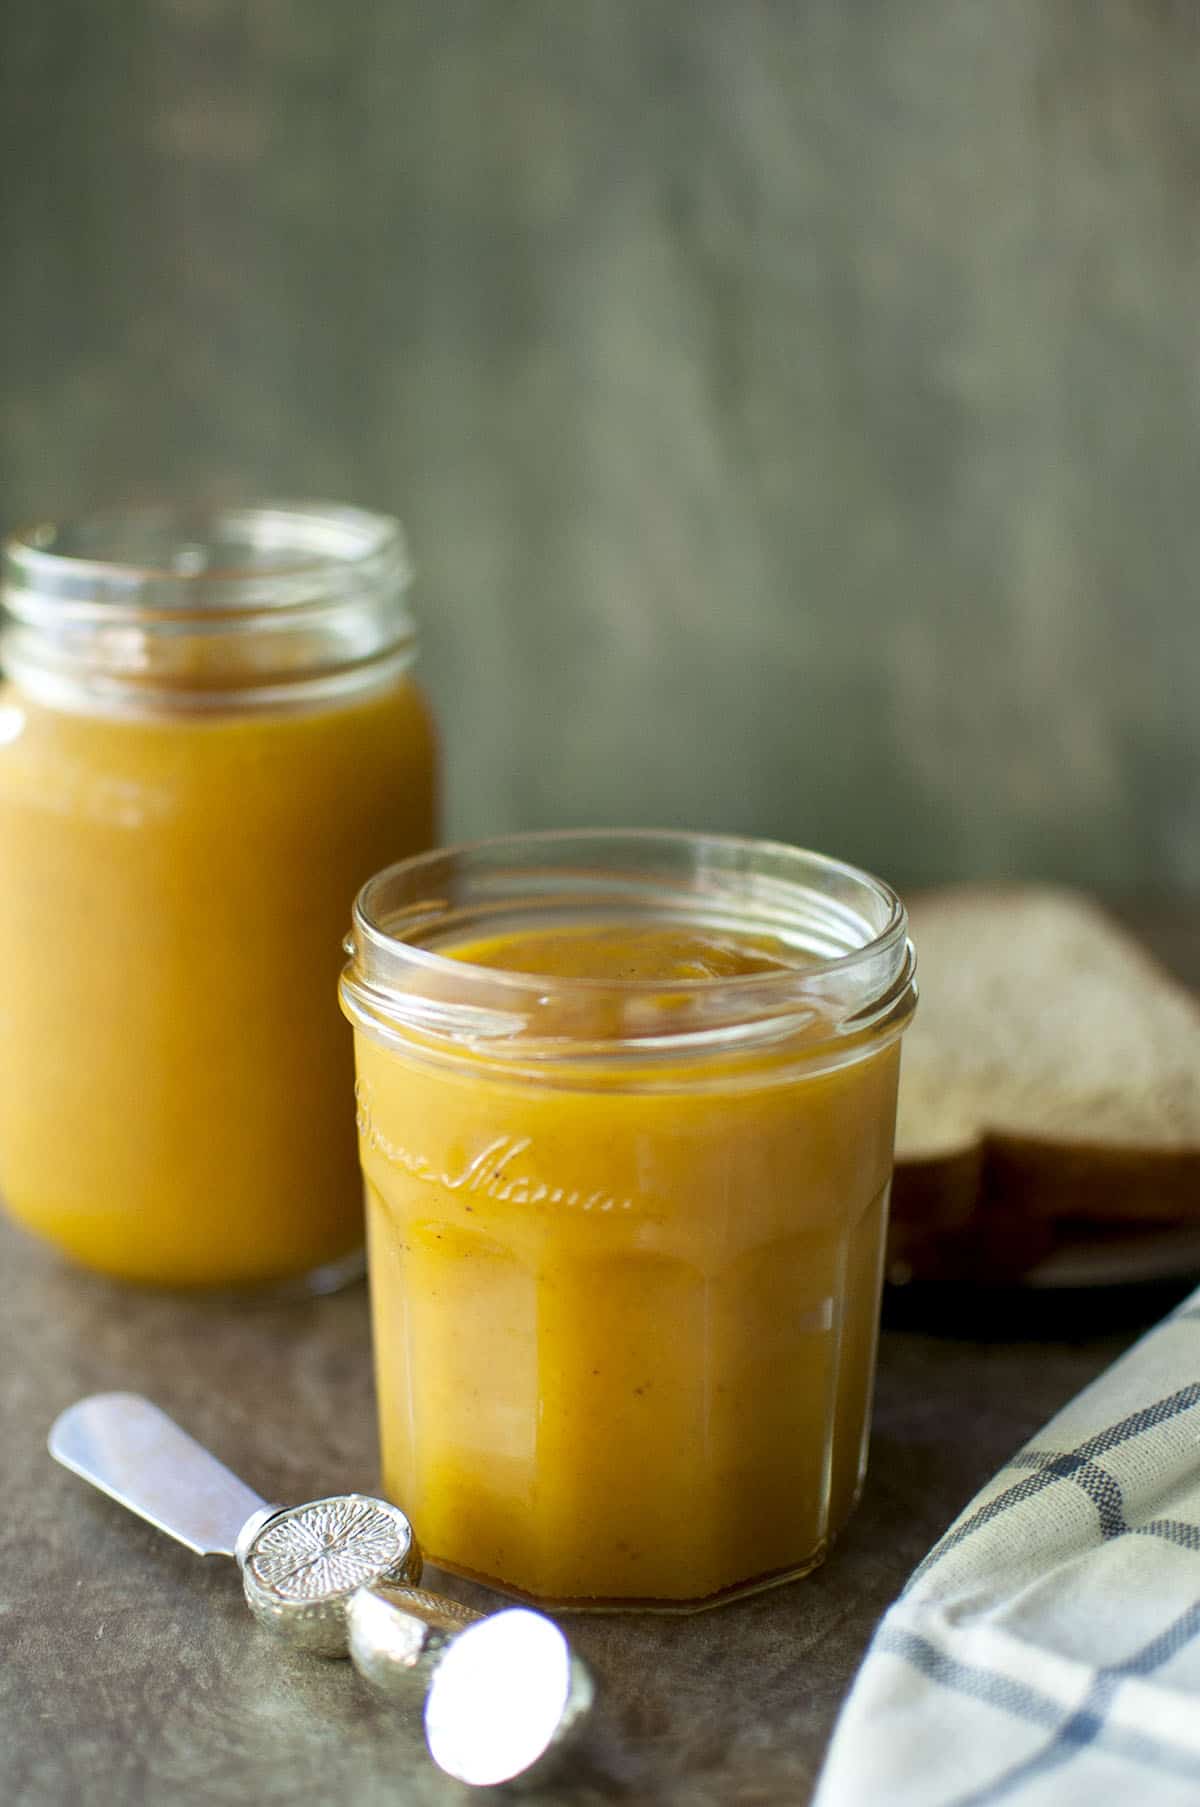 Glass jars with peach and mango jam